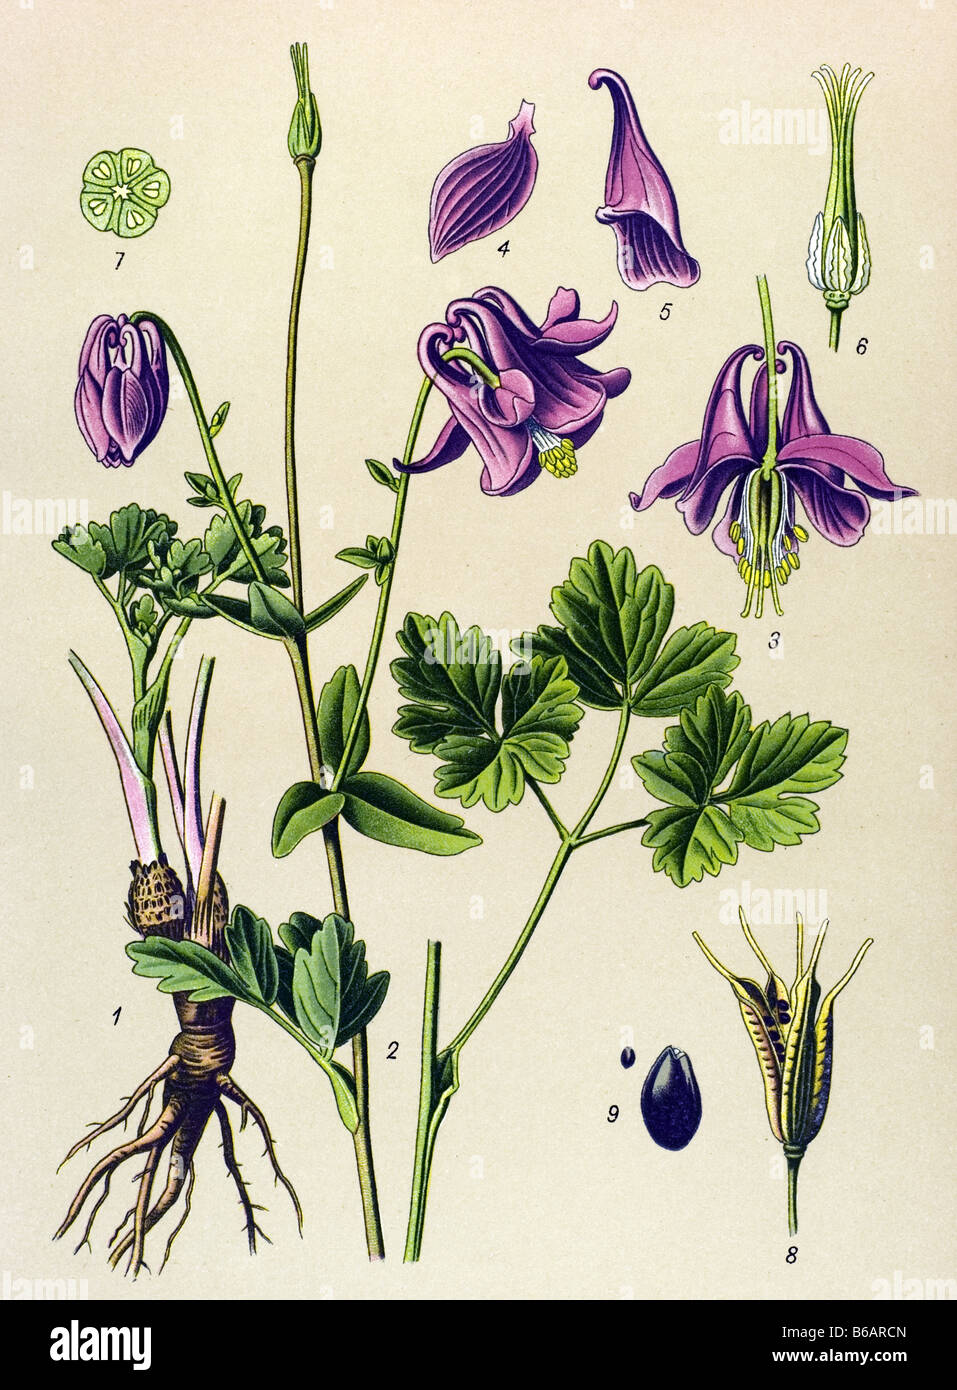 European Columbine, Aquilegia vulgaris, poisonous plants illustrations Stock Photo